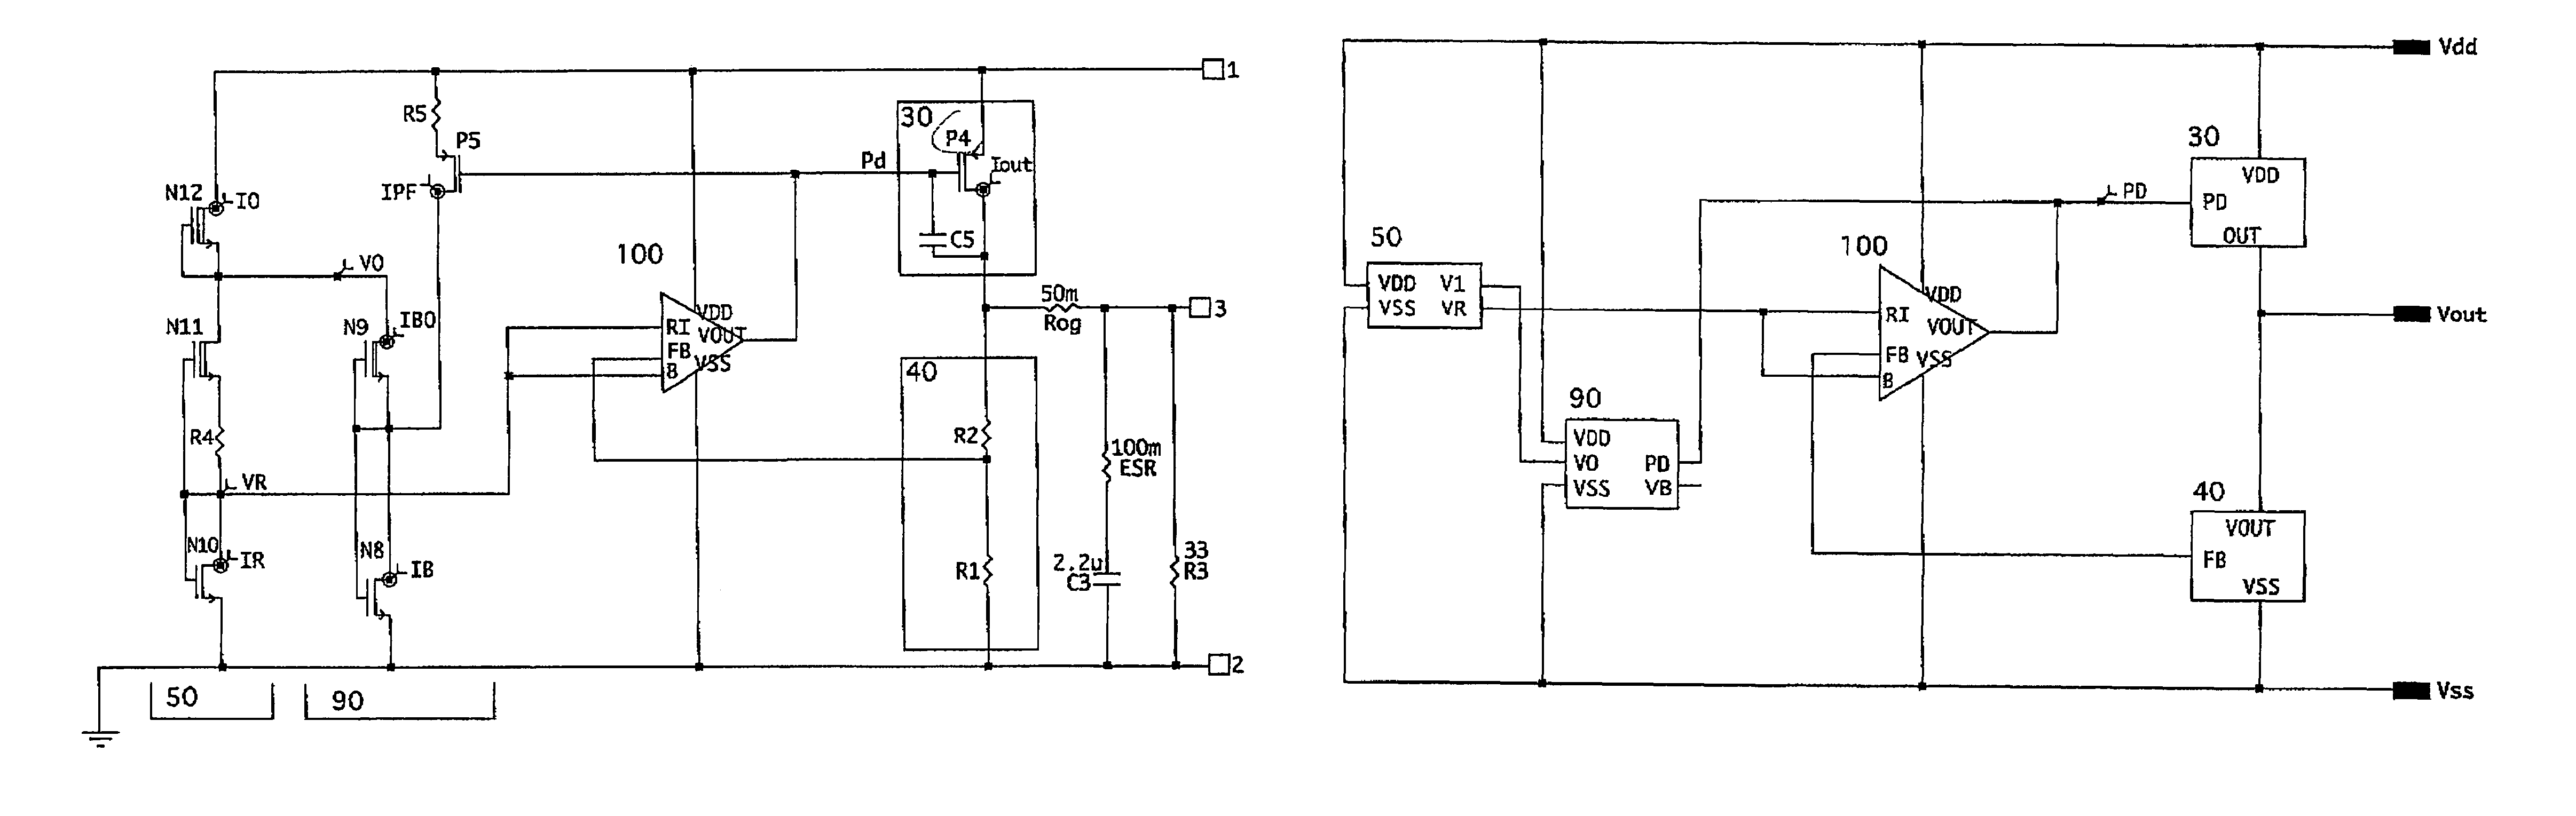 Voltage regulator having an inverse adaptive controller